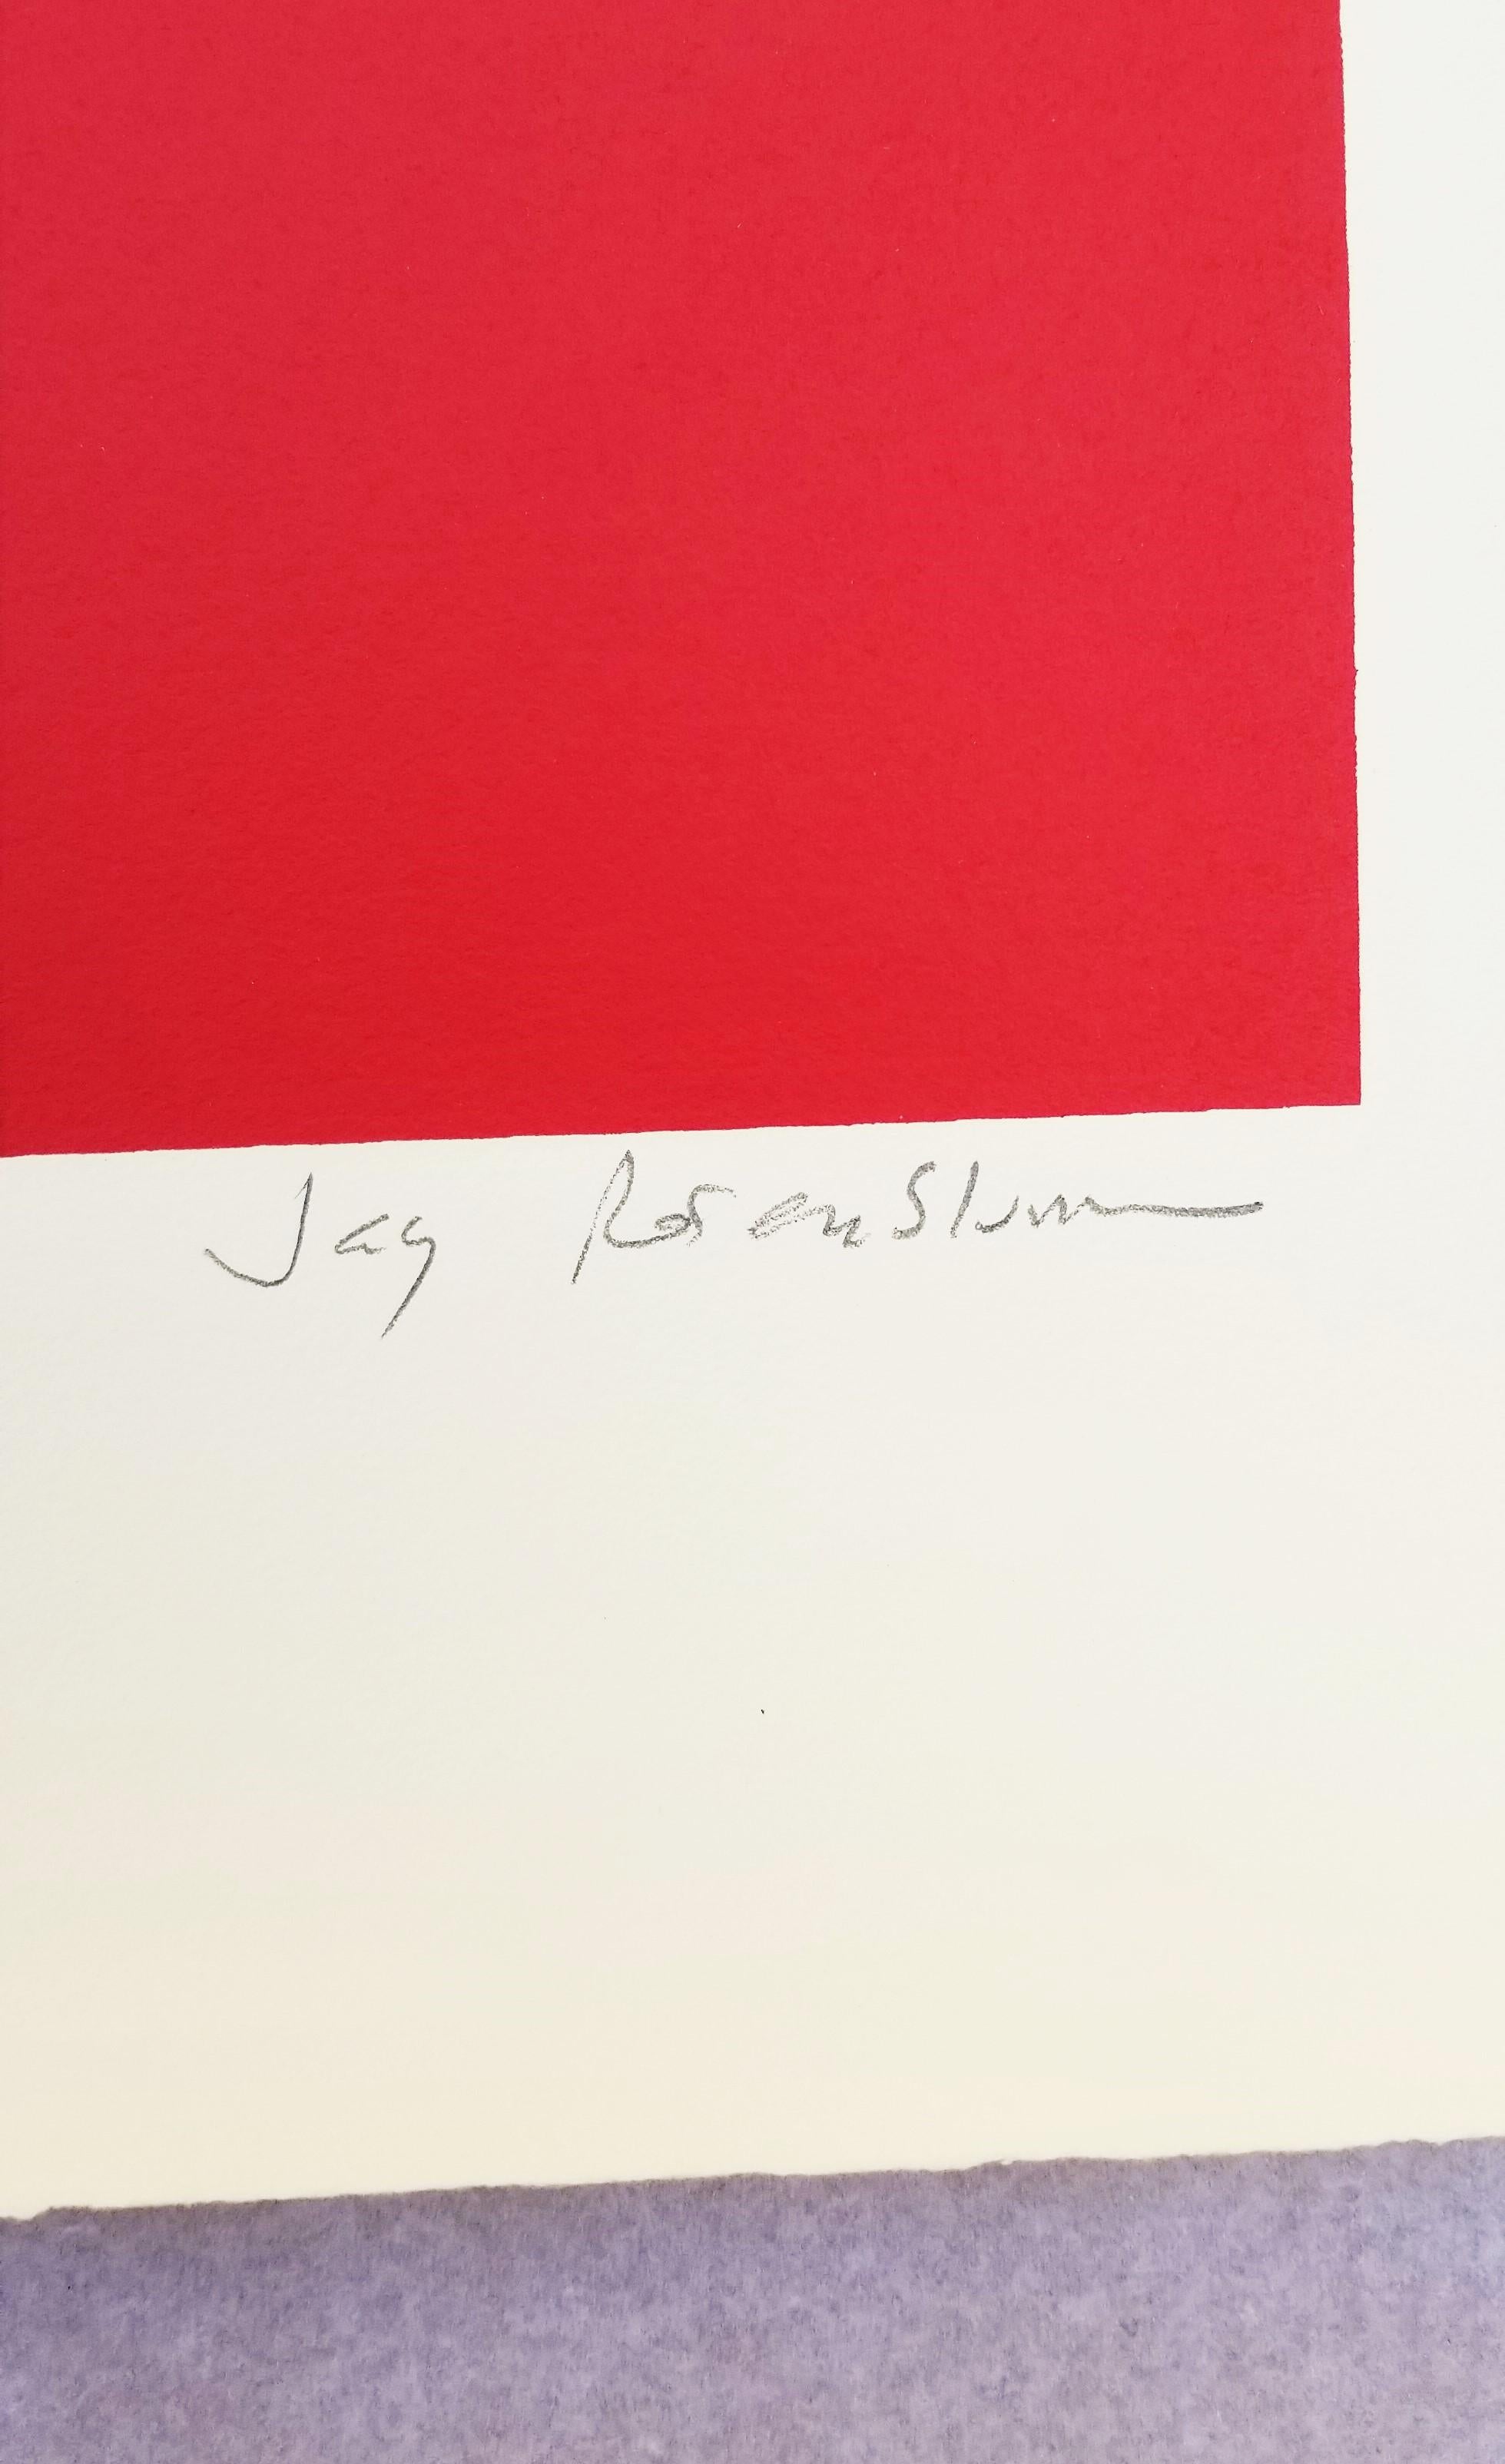 Grove #1 /// Abstrakte geometrische farbenfrohe Jay Rosenbulm New Yorker Siebdruckkunst, Jay Rosenbulm im Angebot 5